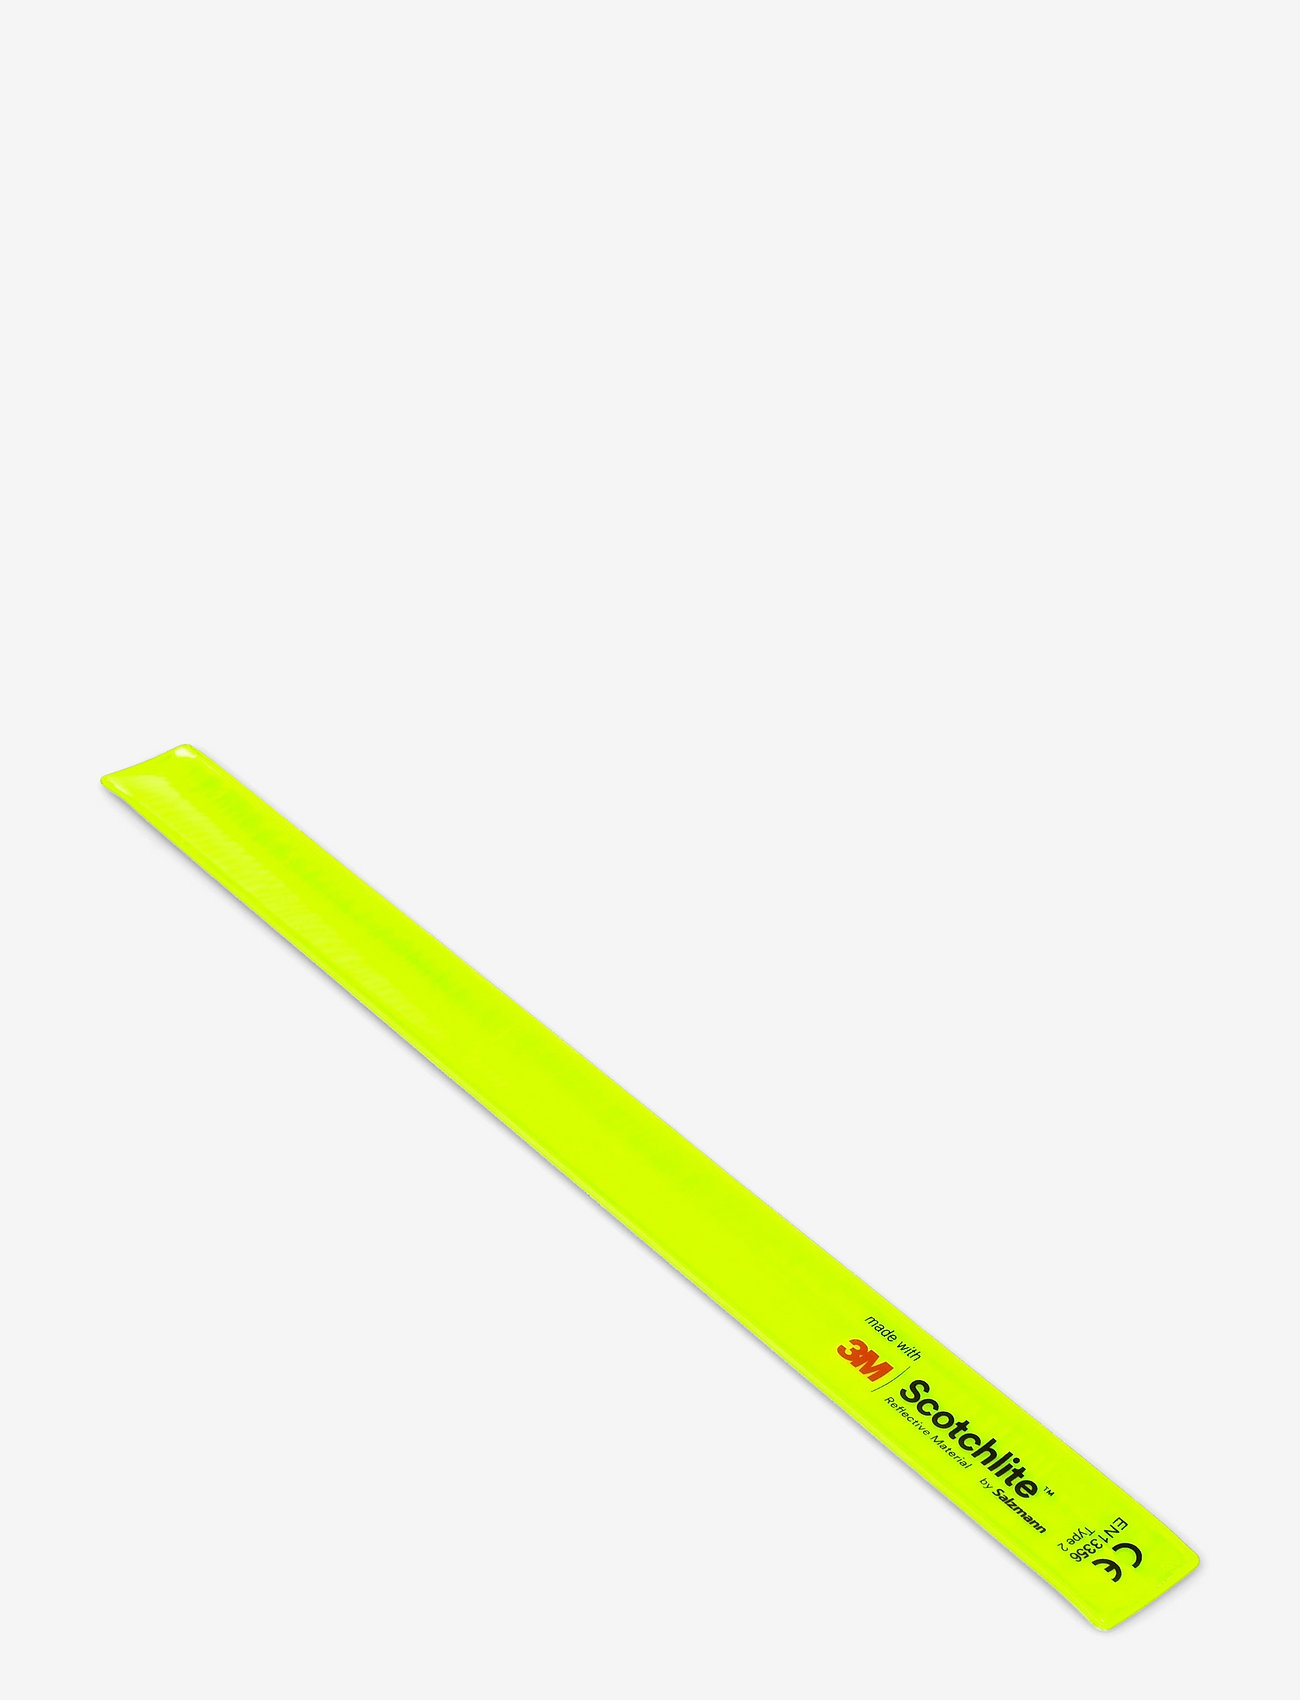 Salzmann - Reflective Slap Wrap 38X3cm - safety yellow - 1